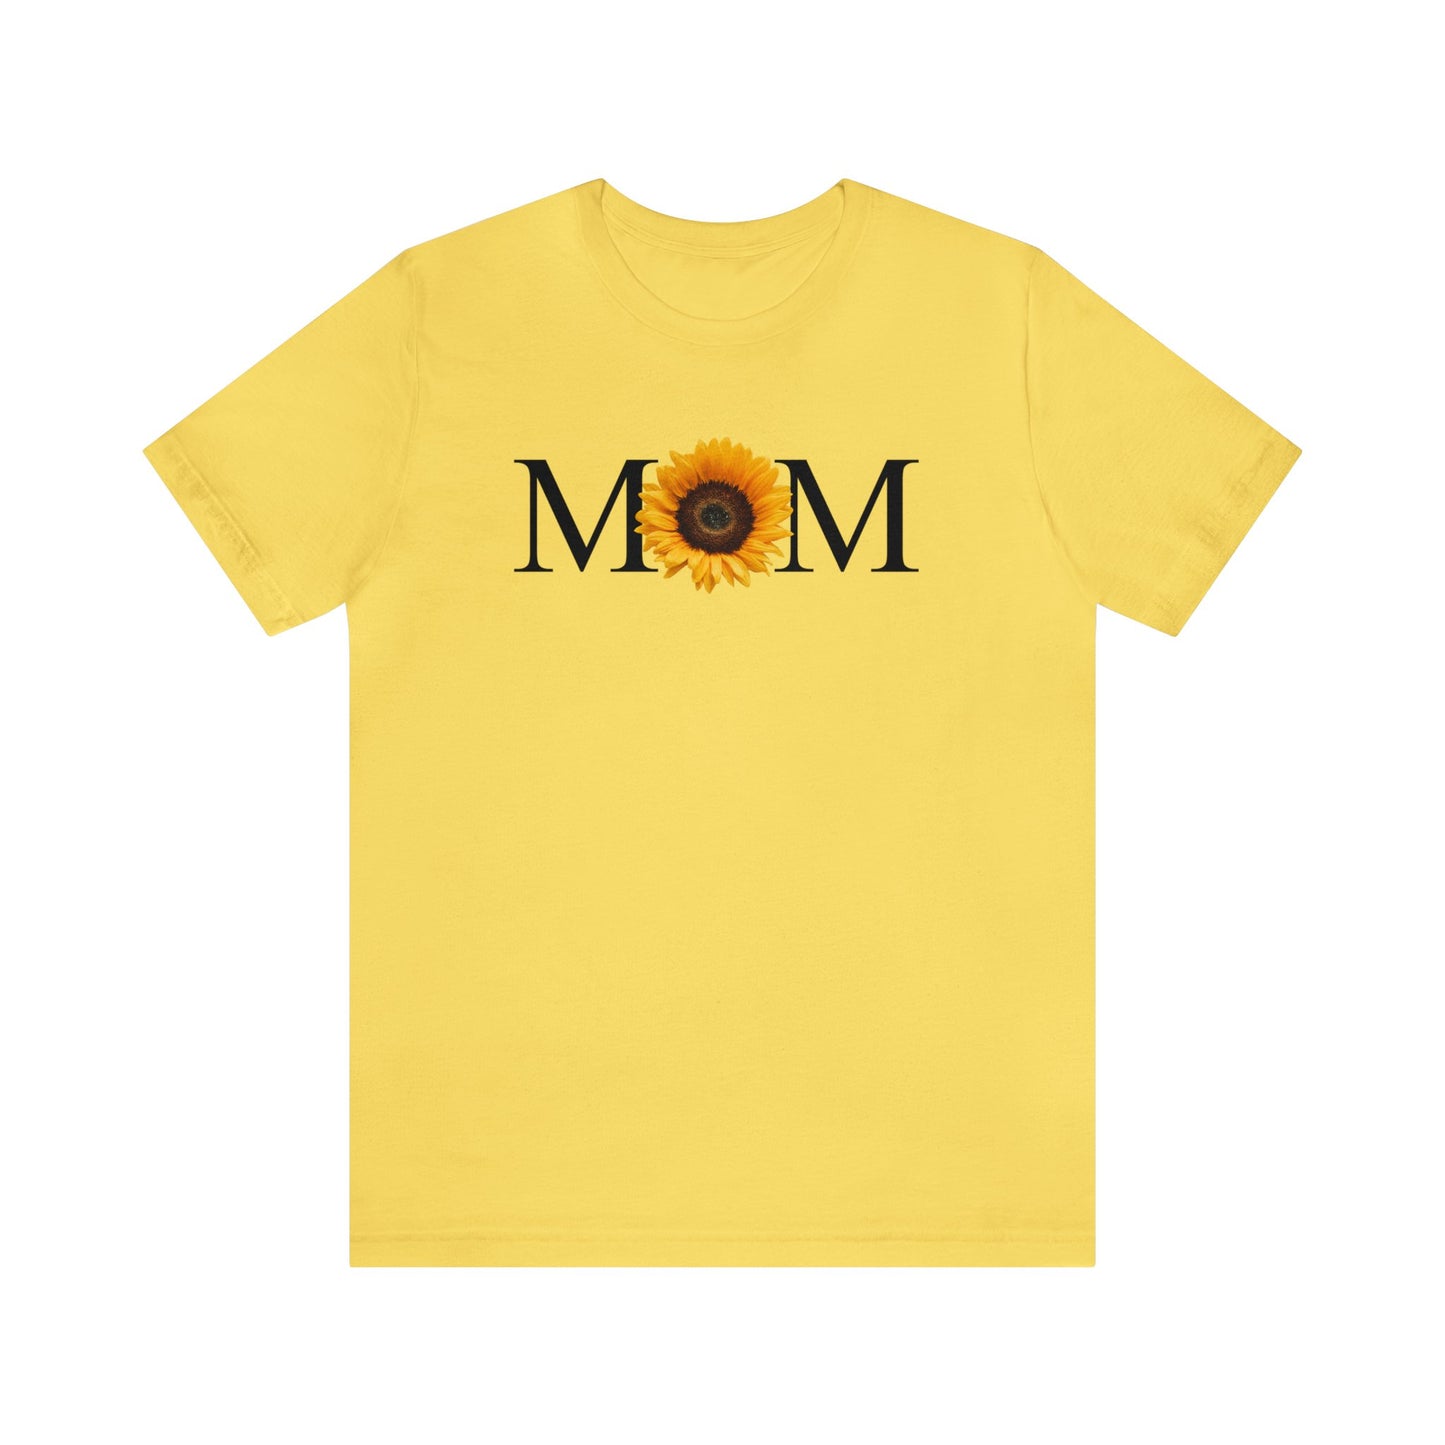 Mom Sunflower Jersey Short Sleeve Tee